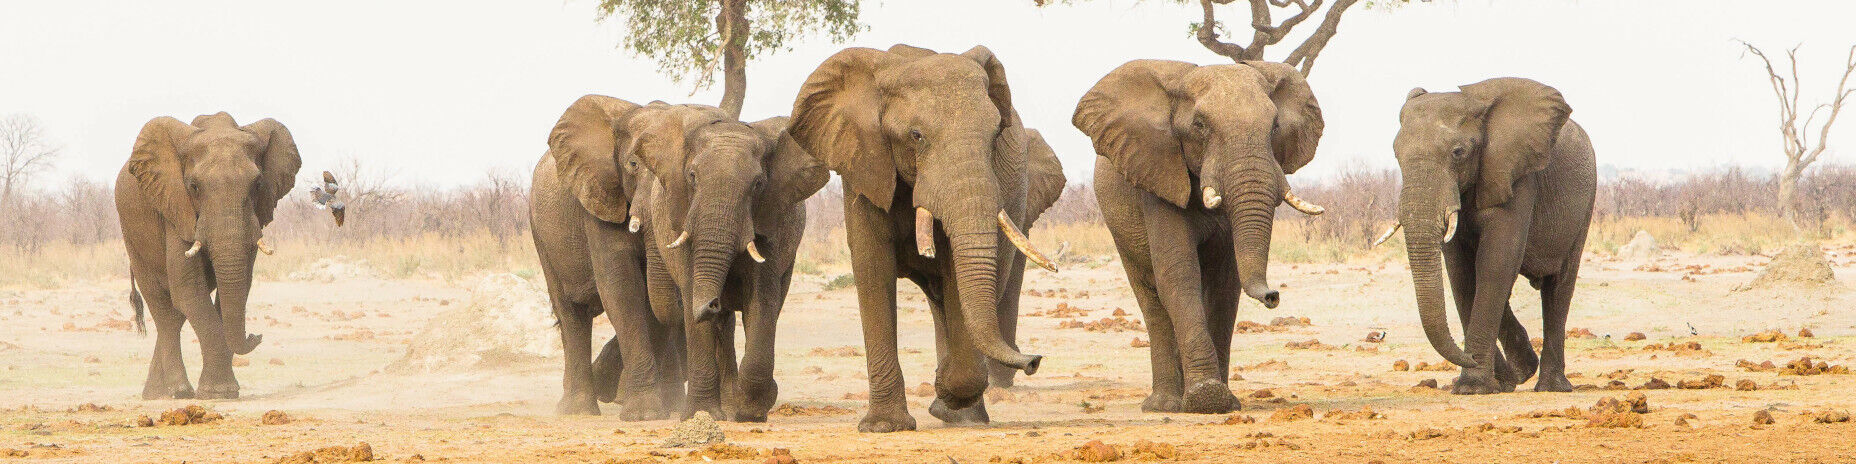 Banner botswana chobe national park elephants Savute Safari Lodge